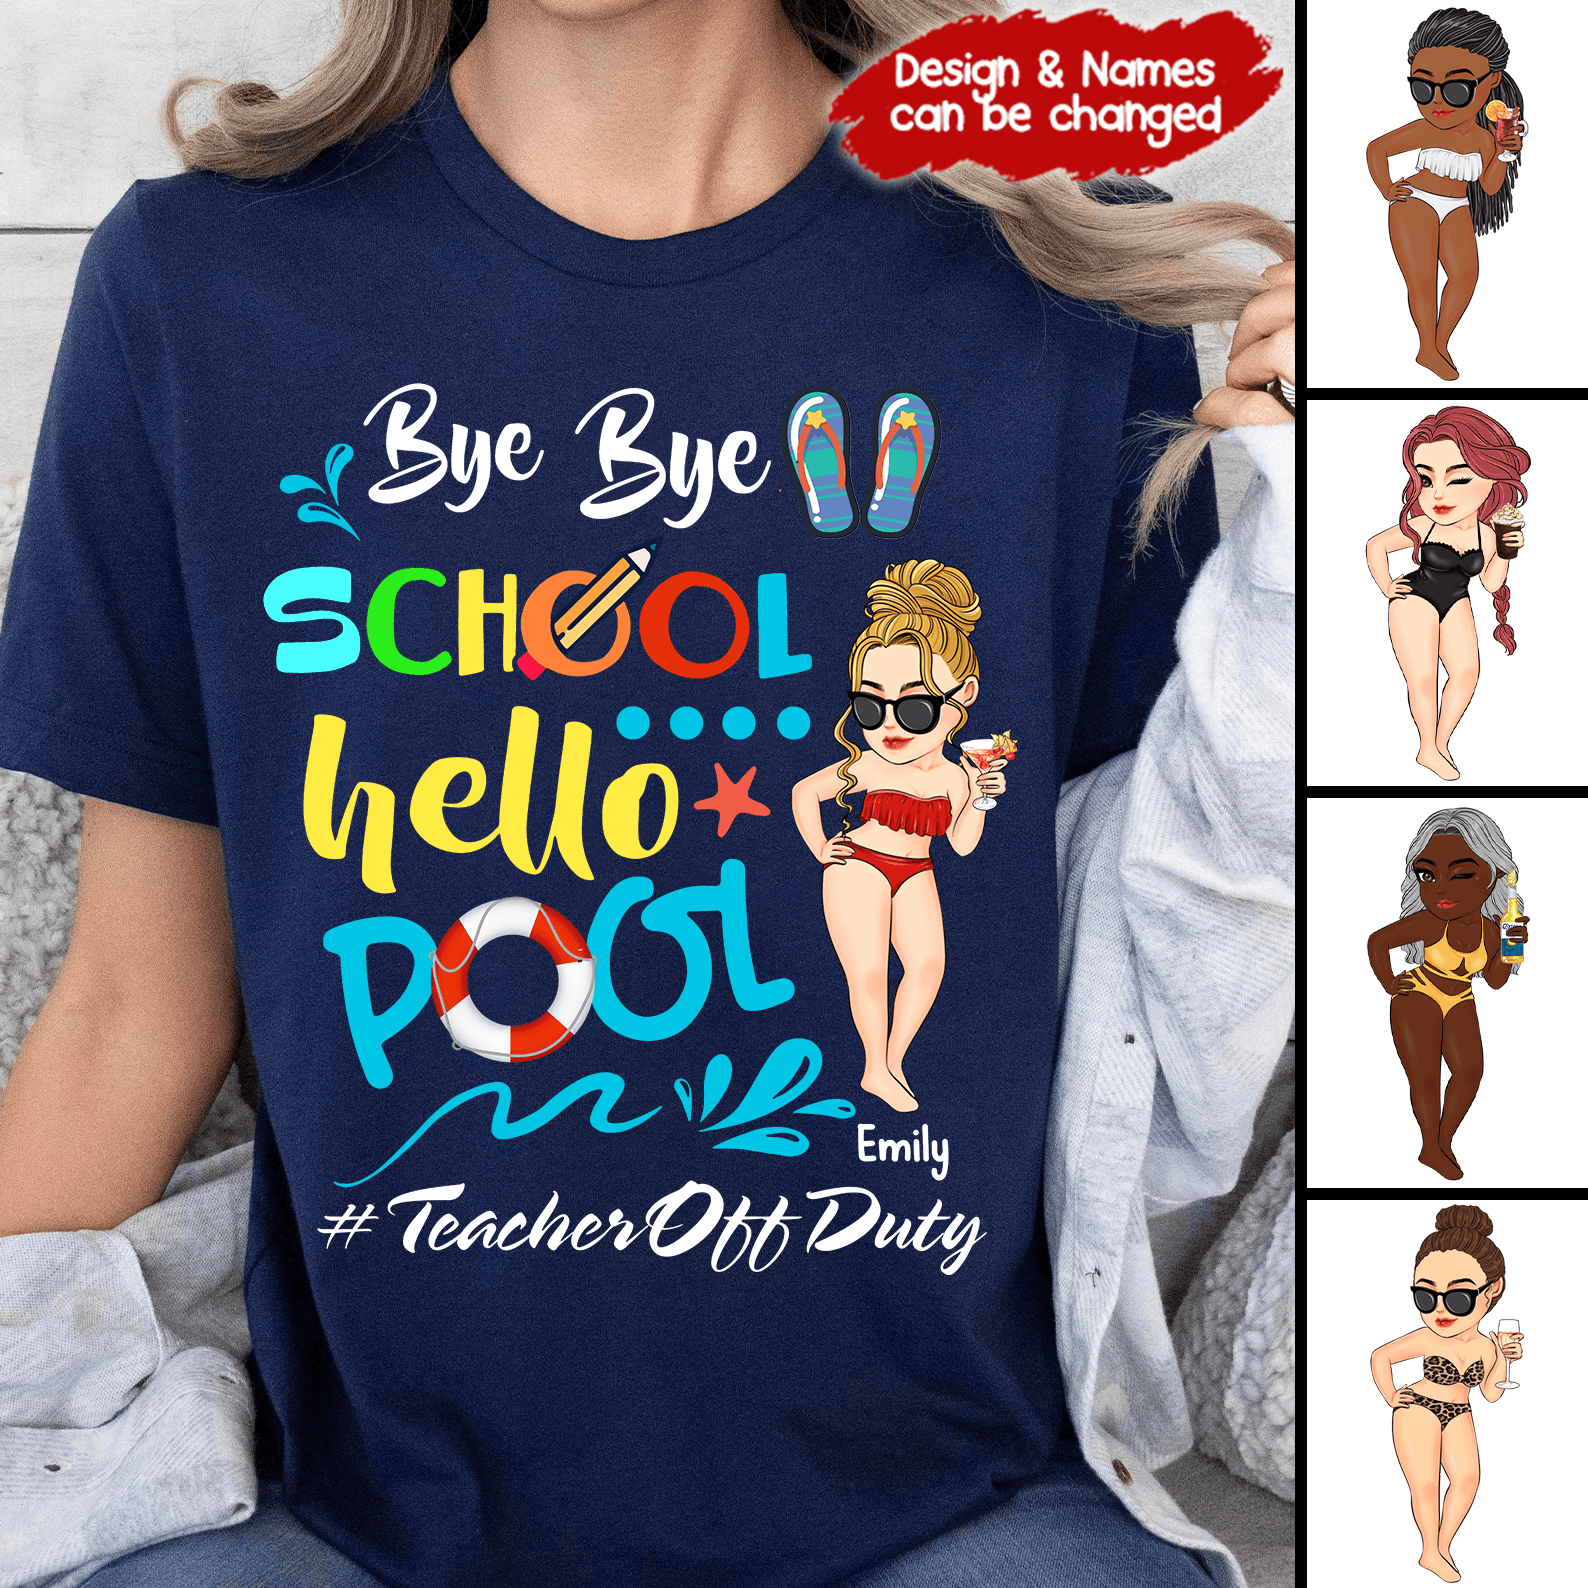 Bye Bye School Hello Pool - Personalized Custom T Shirt - Summer Break, Last Day Of School, Birthday, Loving, Funny Gift for Teacher, Kindergarten, Preschool, Pre K, Paraprofessional - Suzitee Store